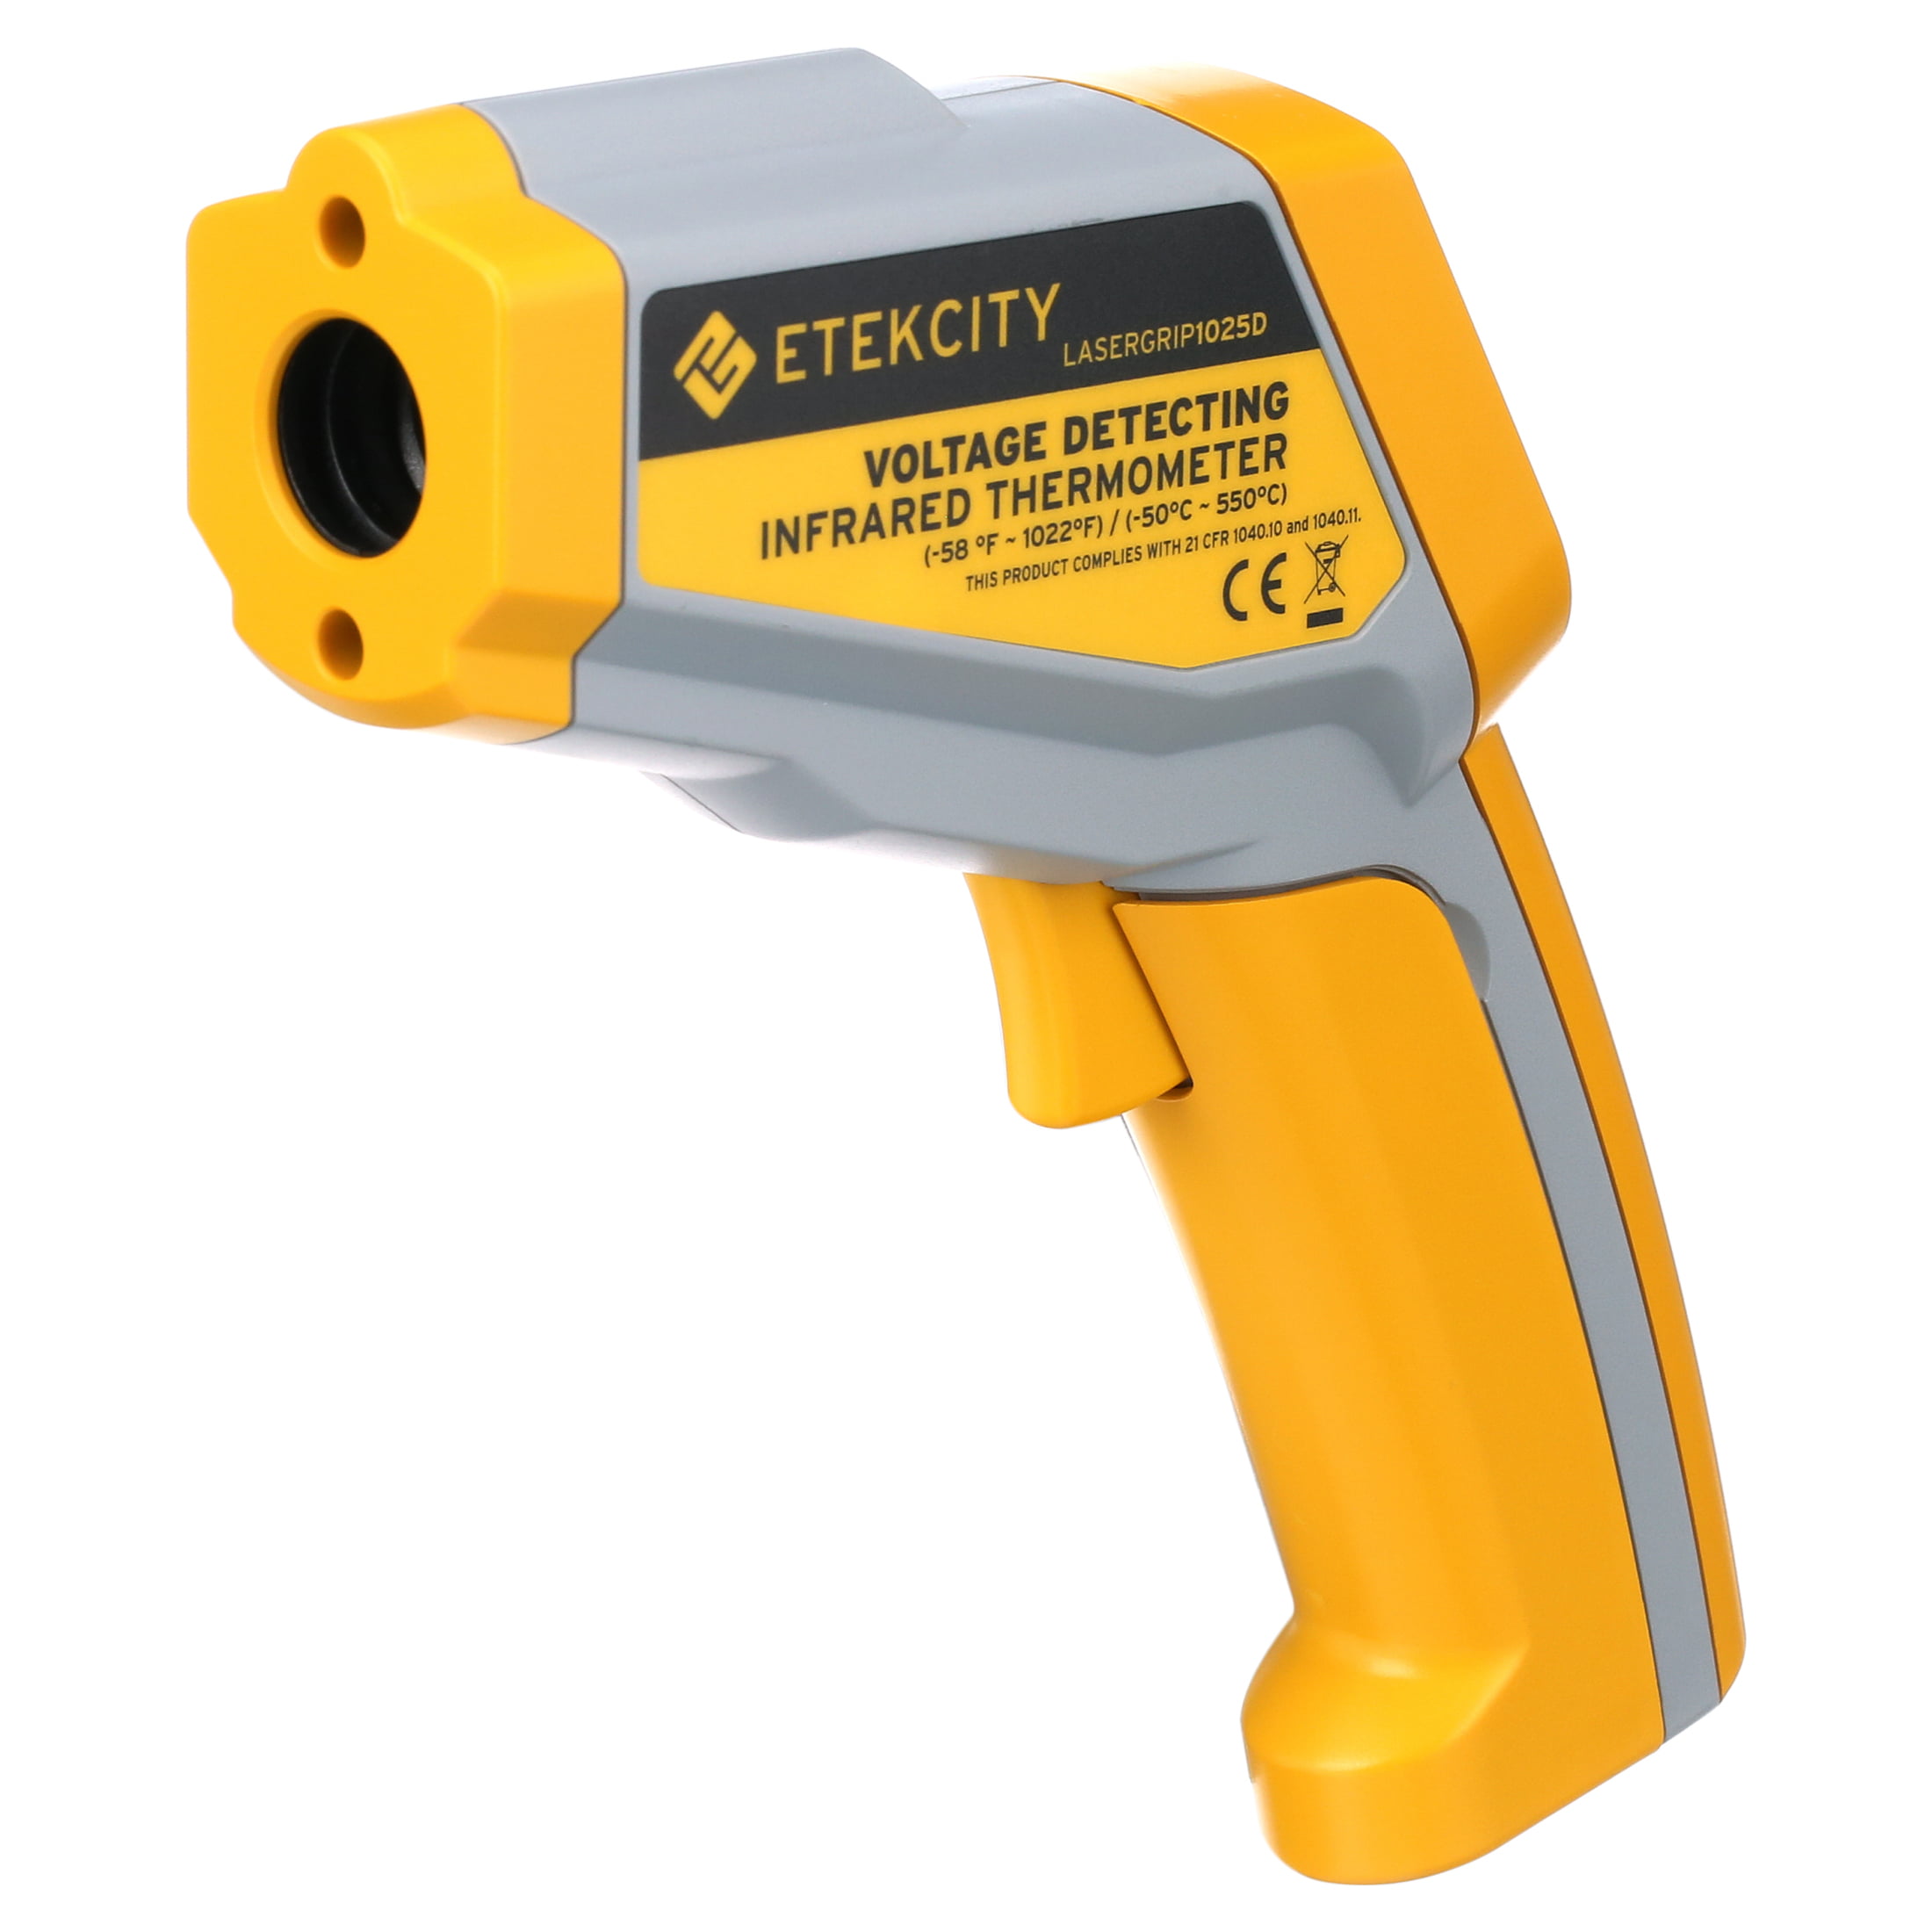 Etekcity Lasergrip 1025D Digital Dual Laser Infrared Thermometer Temperature Gun for sale online 